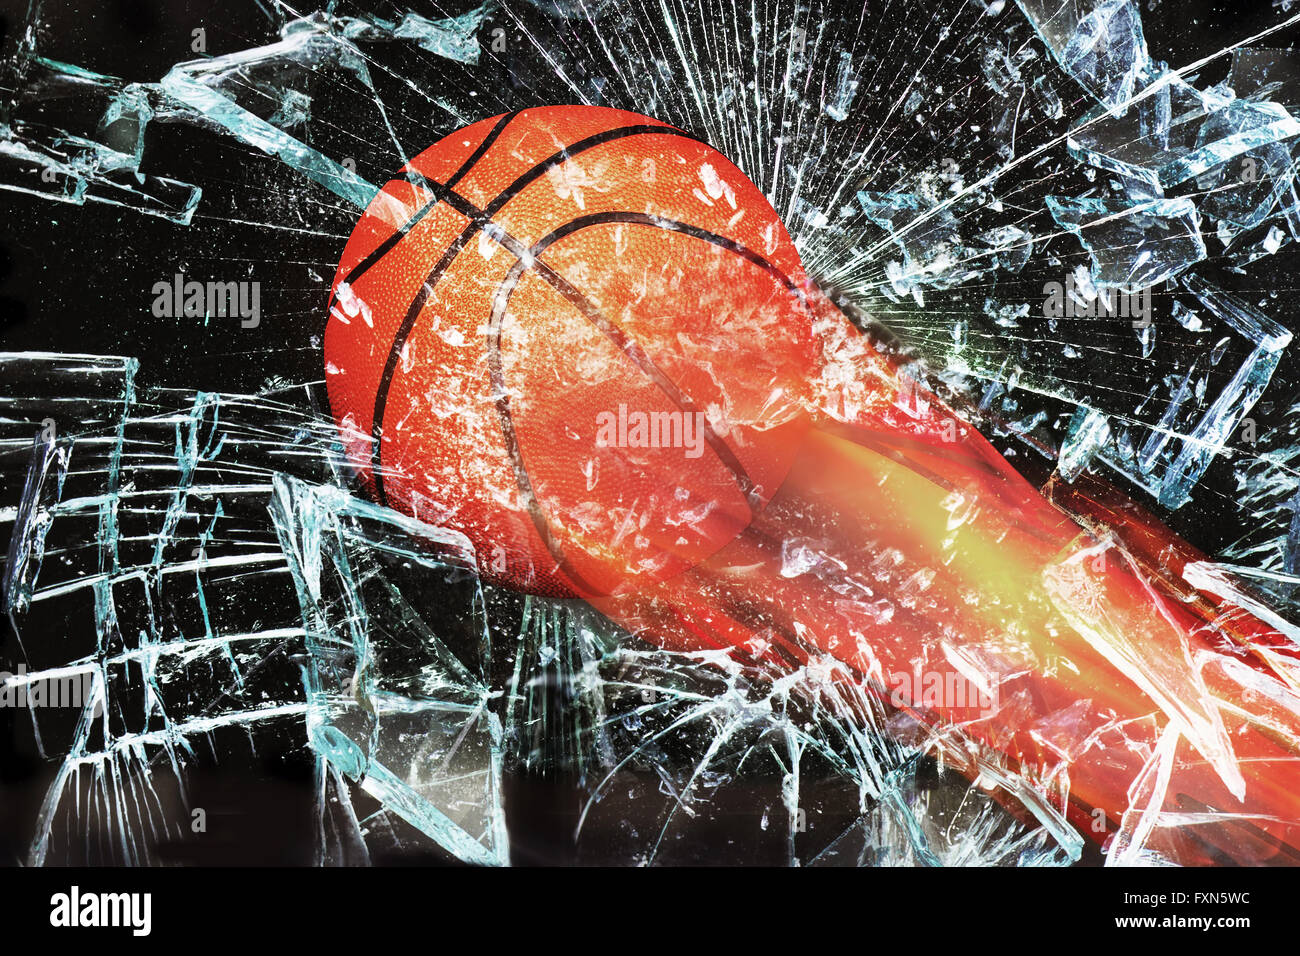 Basketball on fire through broken glass window. Stock Photo